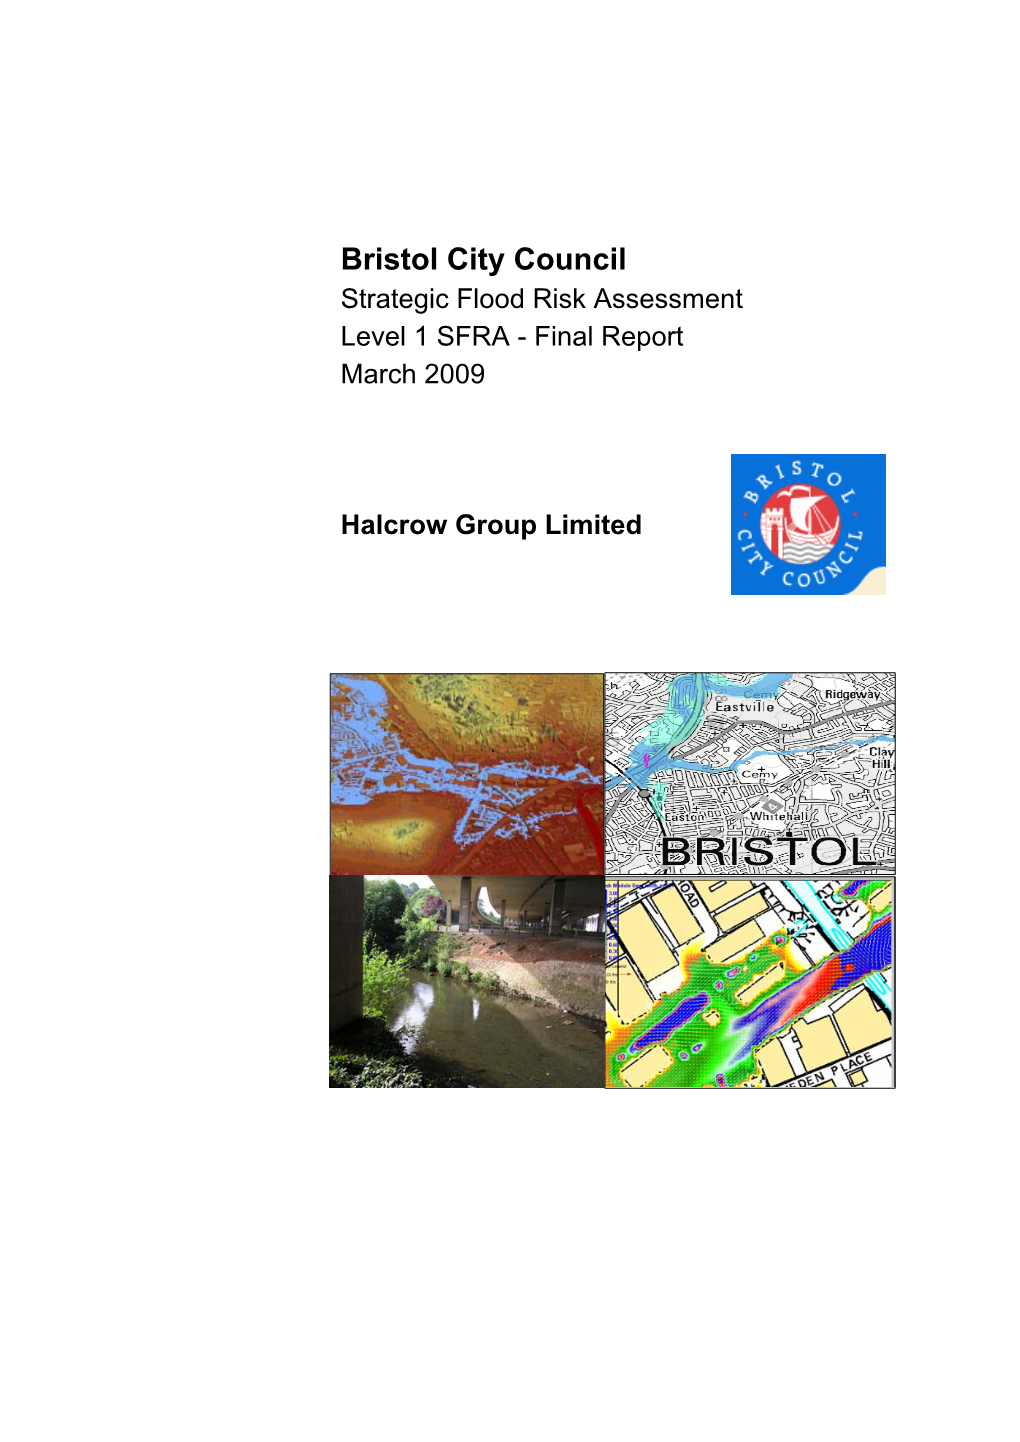 Bristol City Council Strategic Flood Risk Assessment Level 1 SFRA - Final Report March 2009